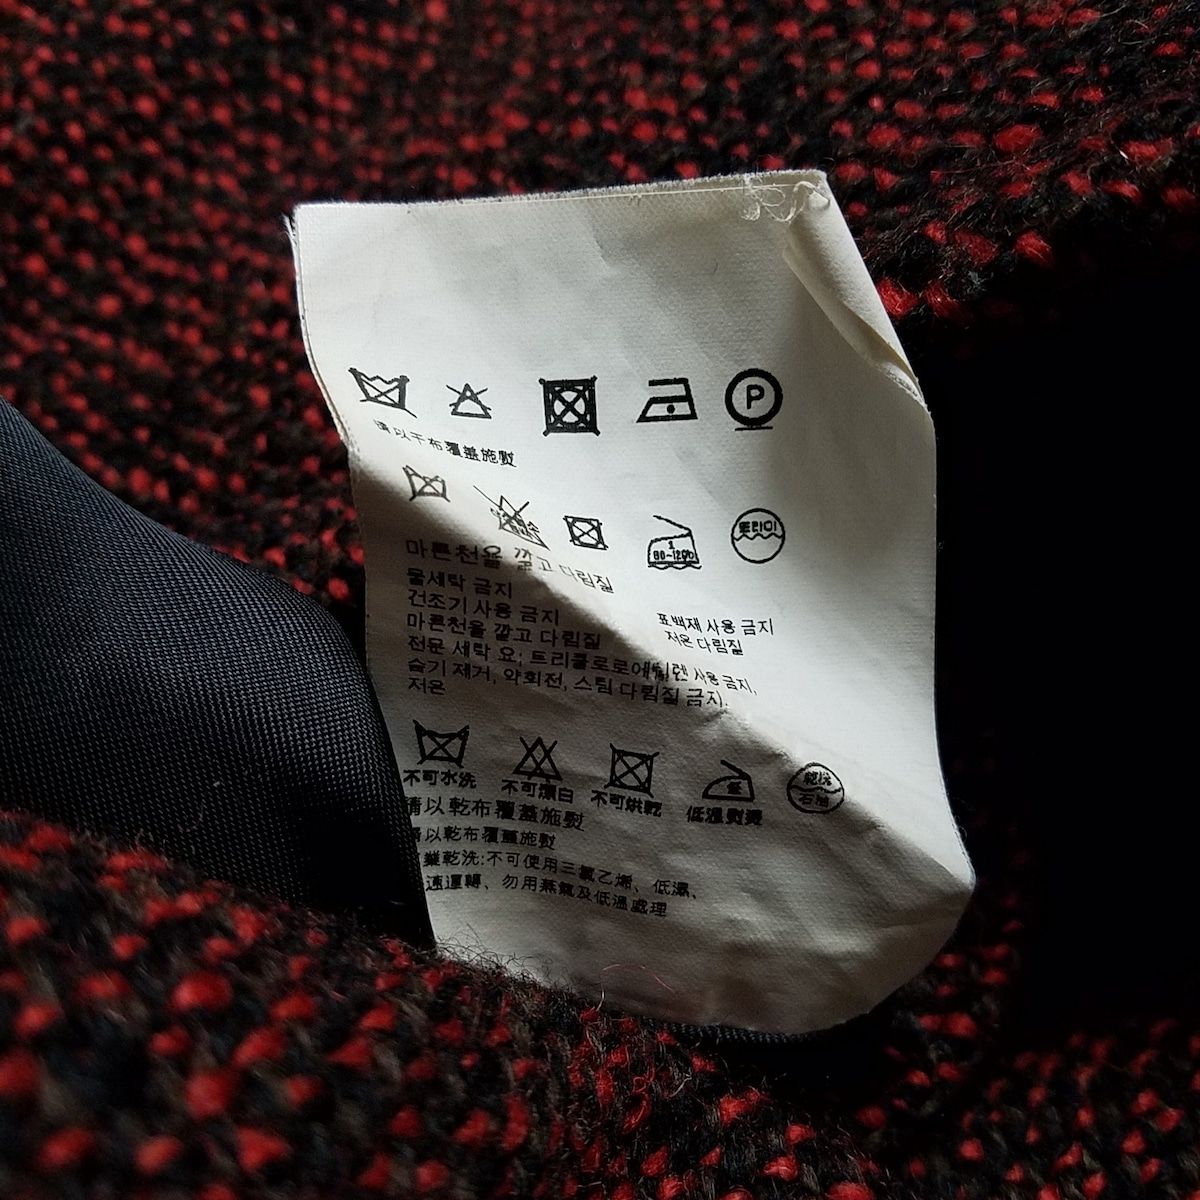 miumiu(ミュウミュウ) コート サイズ40 M レディース - レッド×黒 長袖/冬